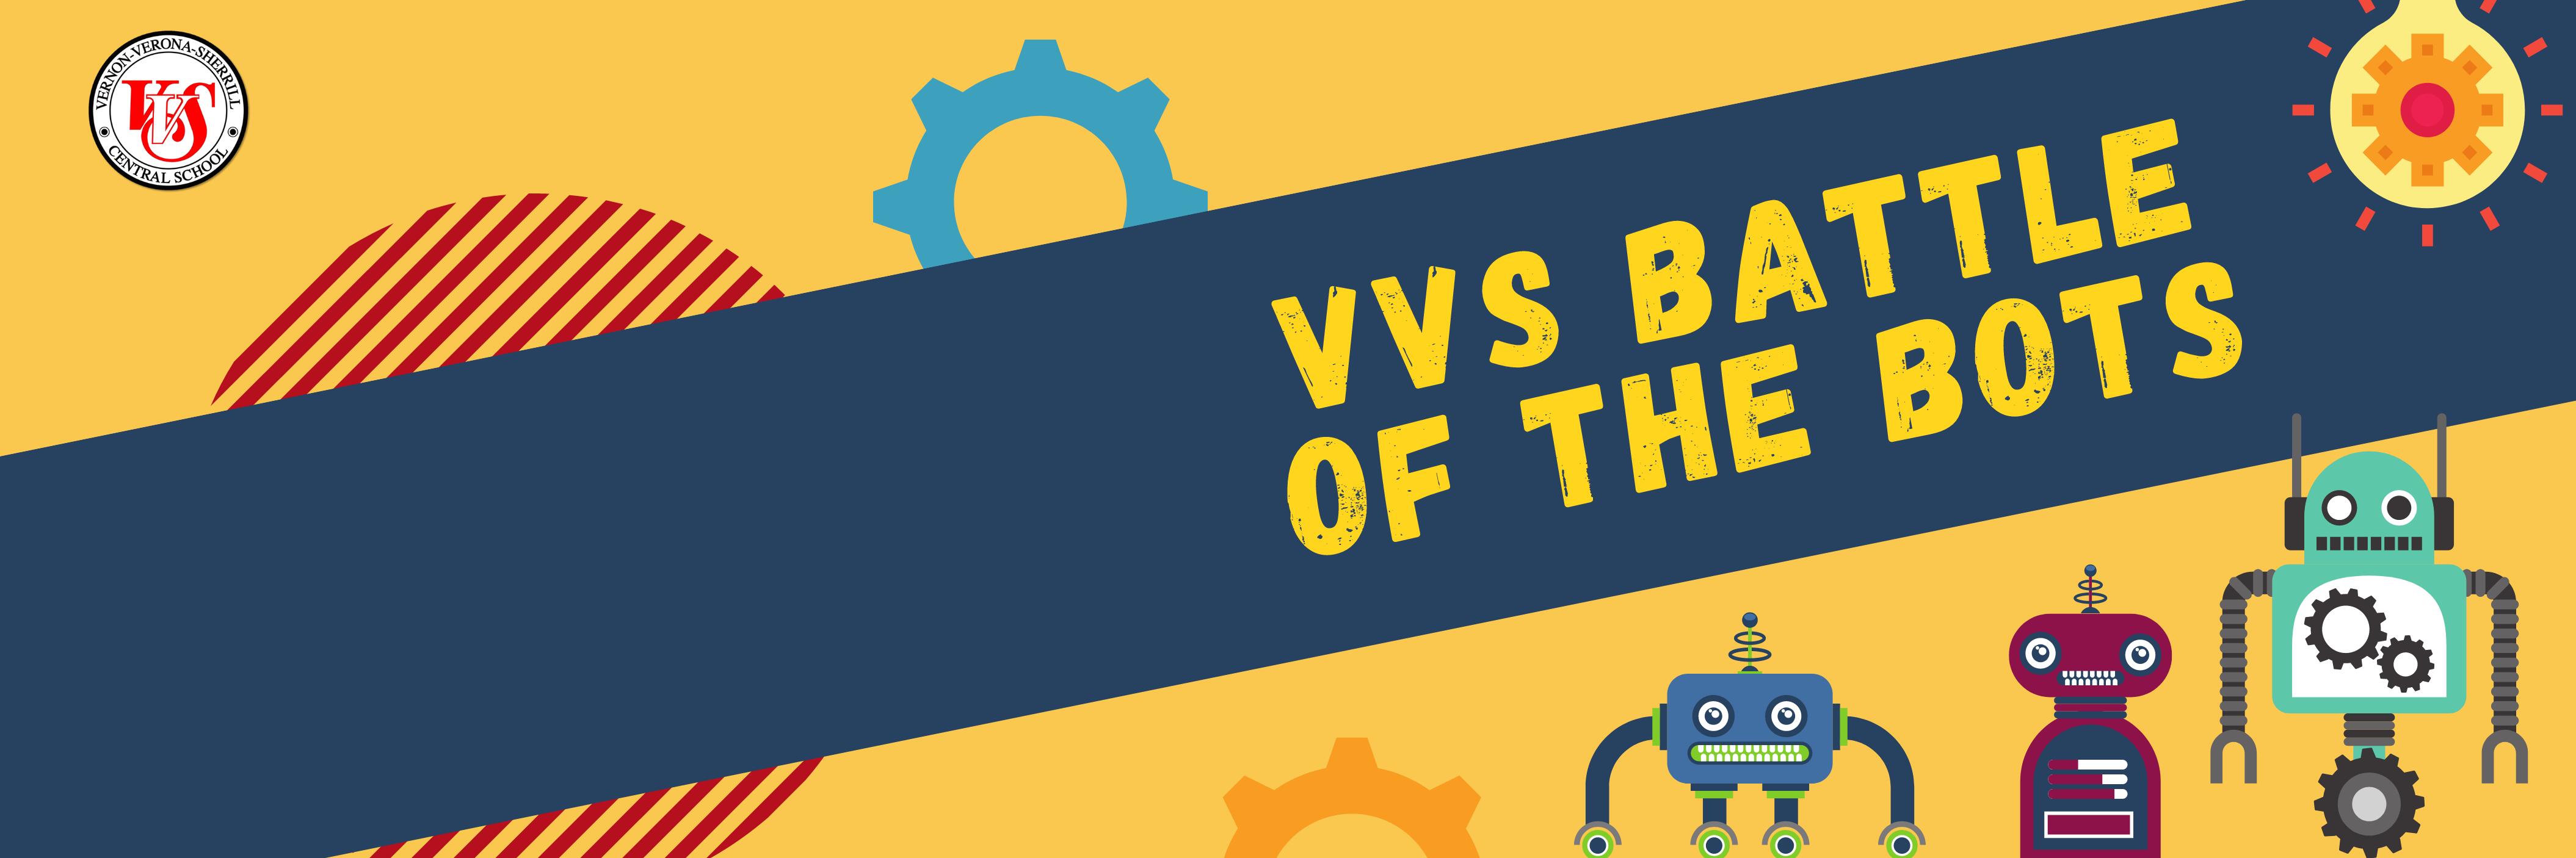 VVS Battle of the Bots robotics logo